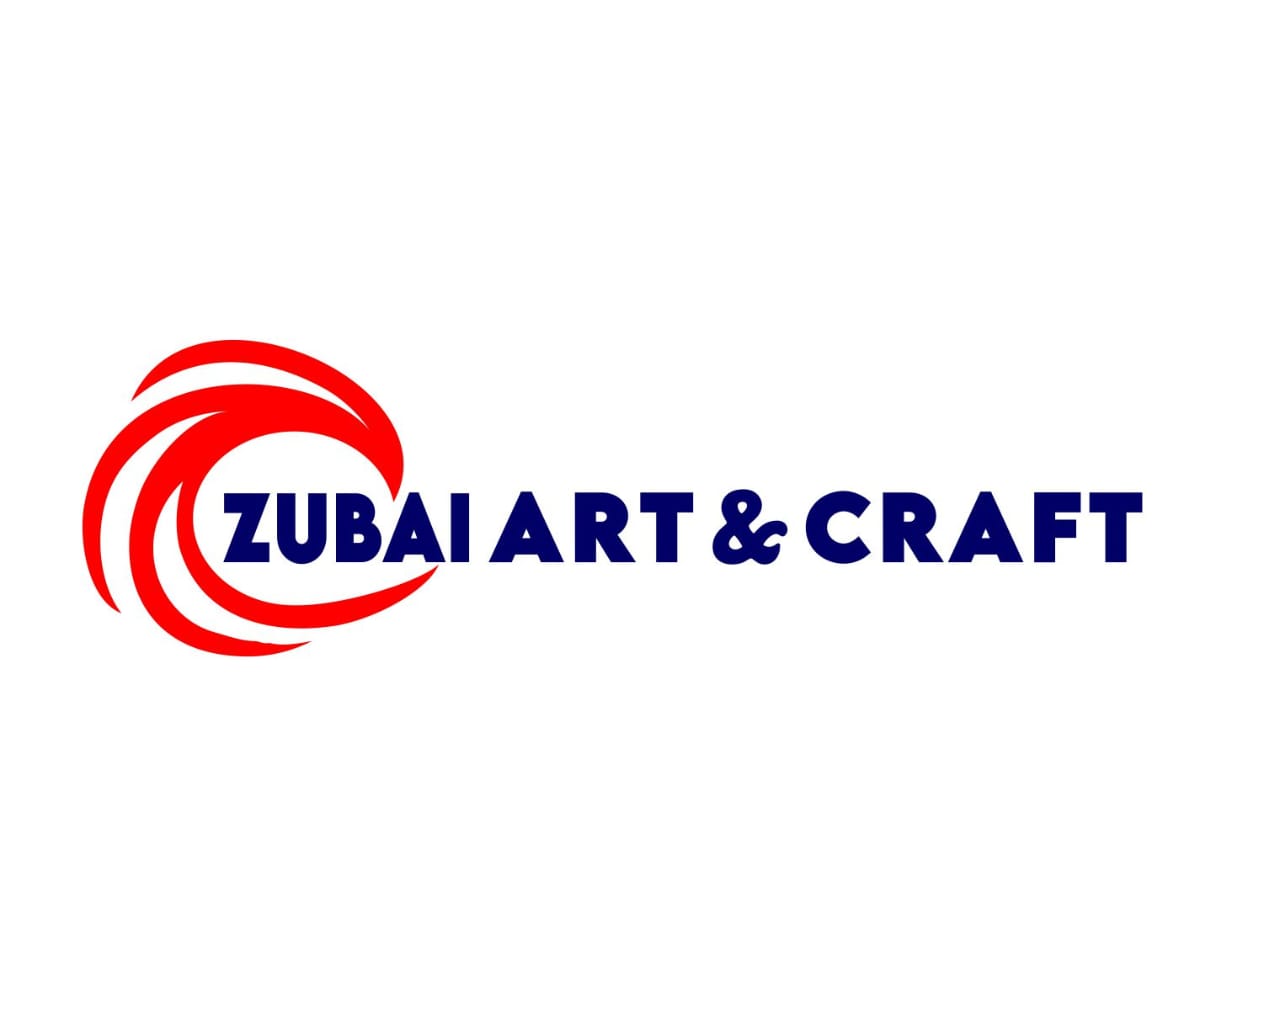 The logo for zubair art & craft.